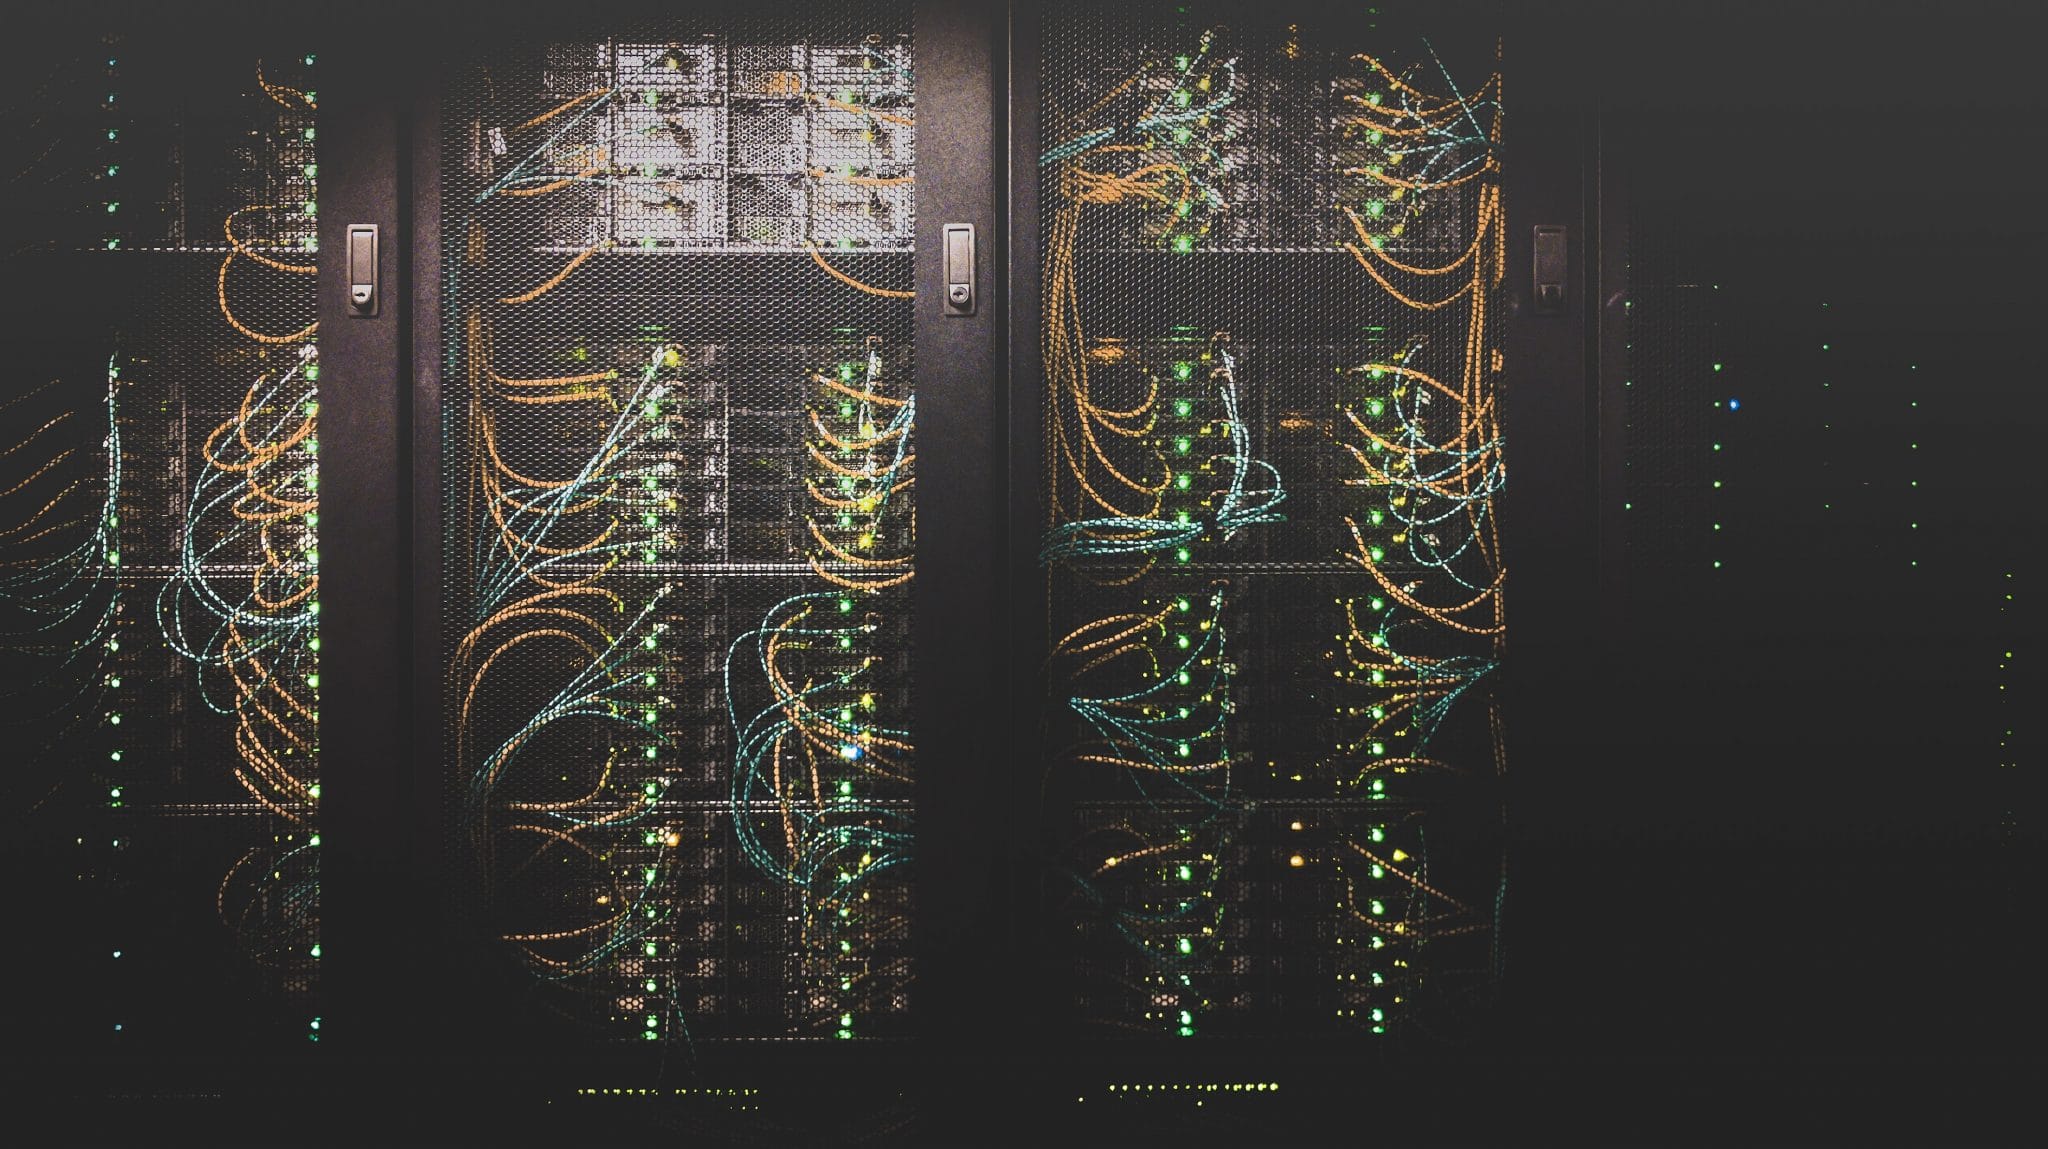 Computer cloud server behind the scenes